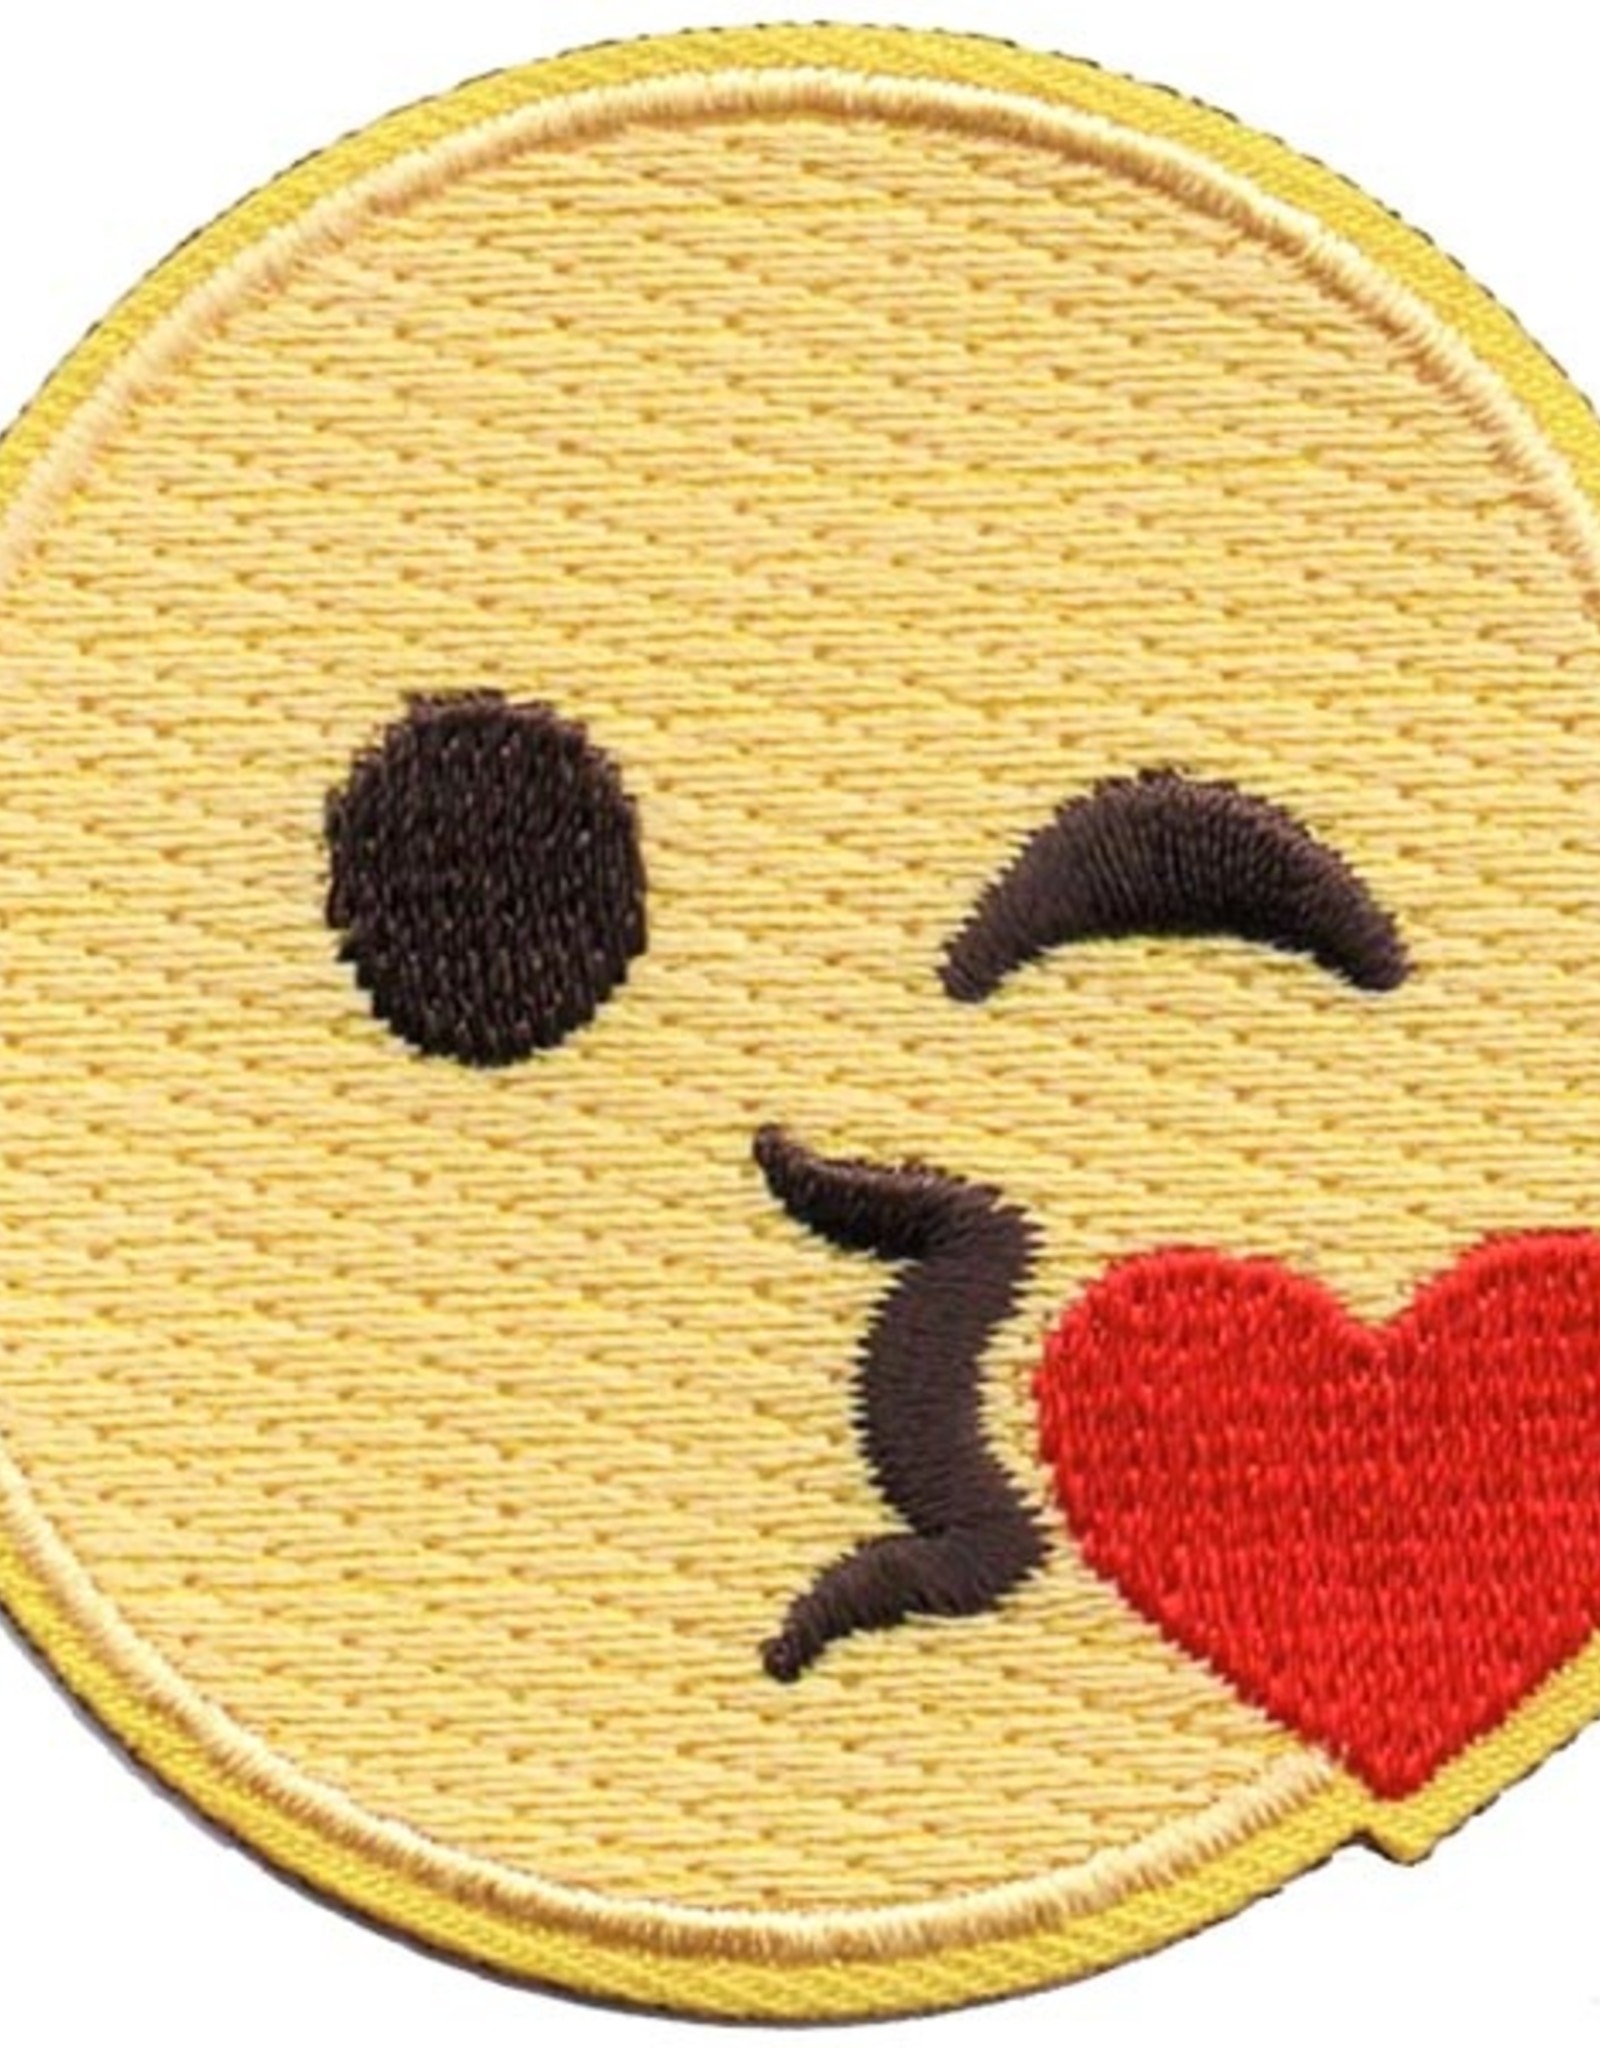 Advantage Emblem & Screen Prnt *Emoji Blowing Kisses Fun Patch